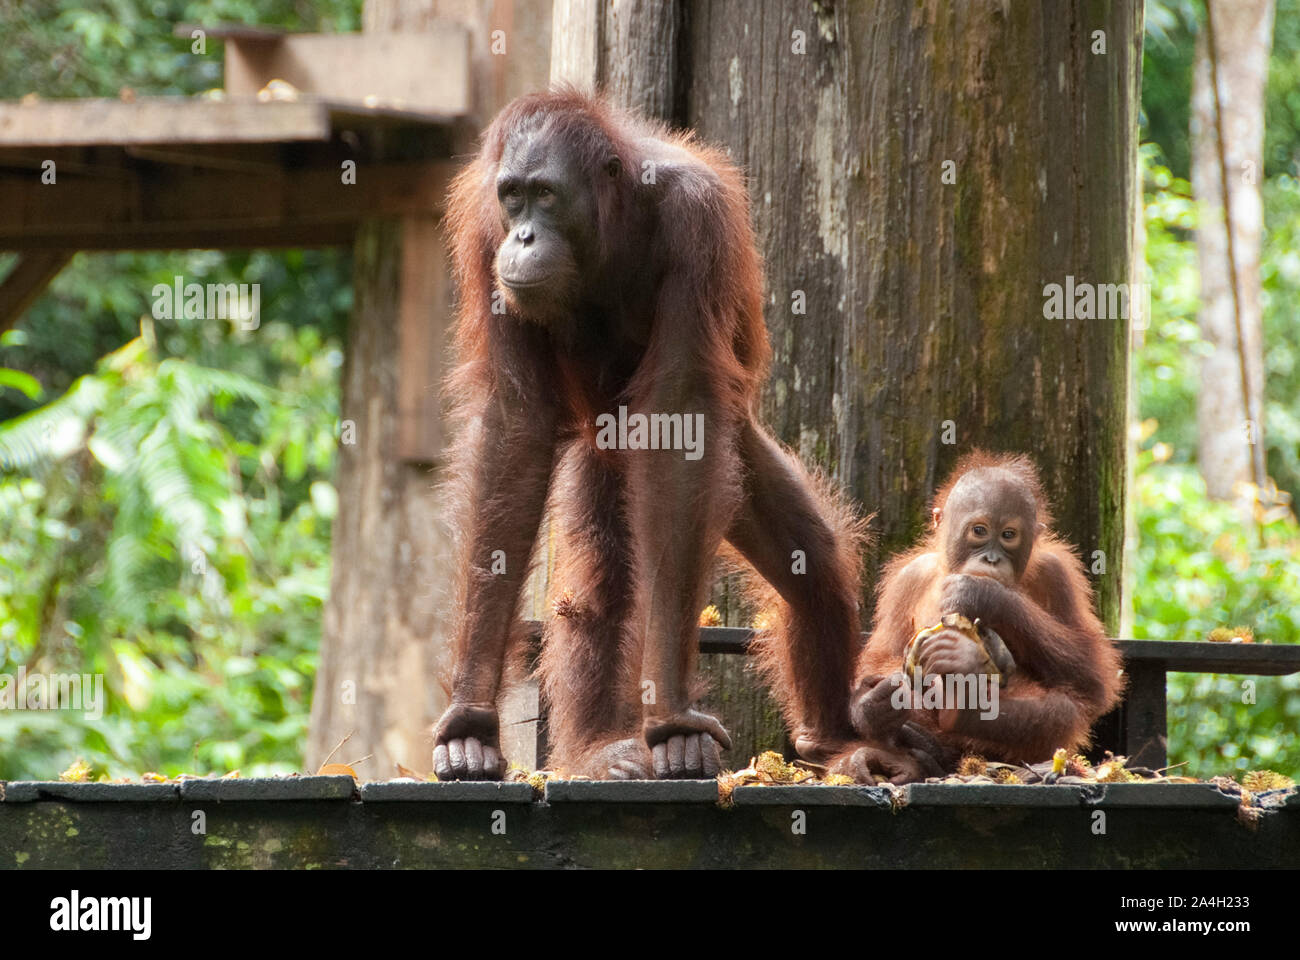 Orangutan, Pongo pygmaeus, with baby on feeding platform, Sepilok Orangutan Rehabilitation Centre, Sandakan, Sabah, Northeastern Borneo, Malaysia Stock Photo